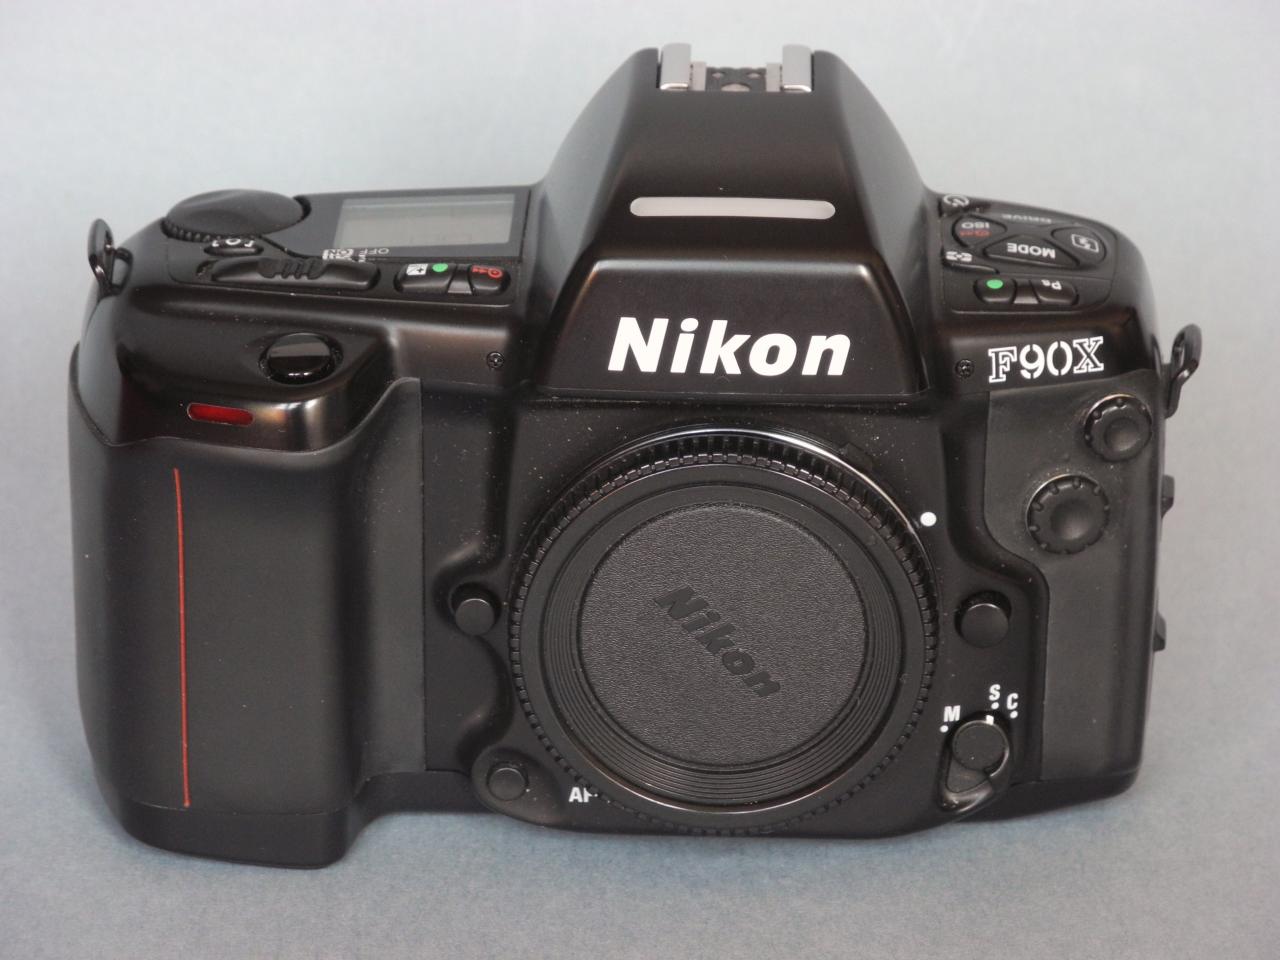 *Nikon F90x 1994*